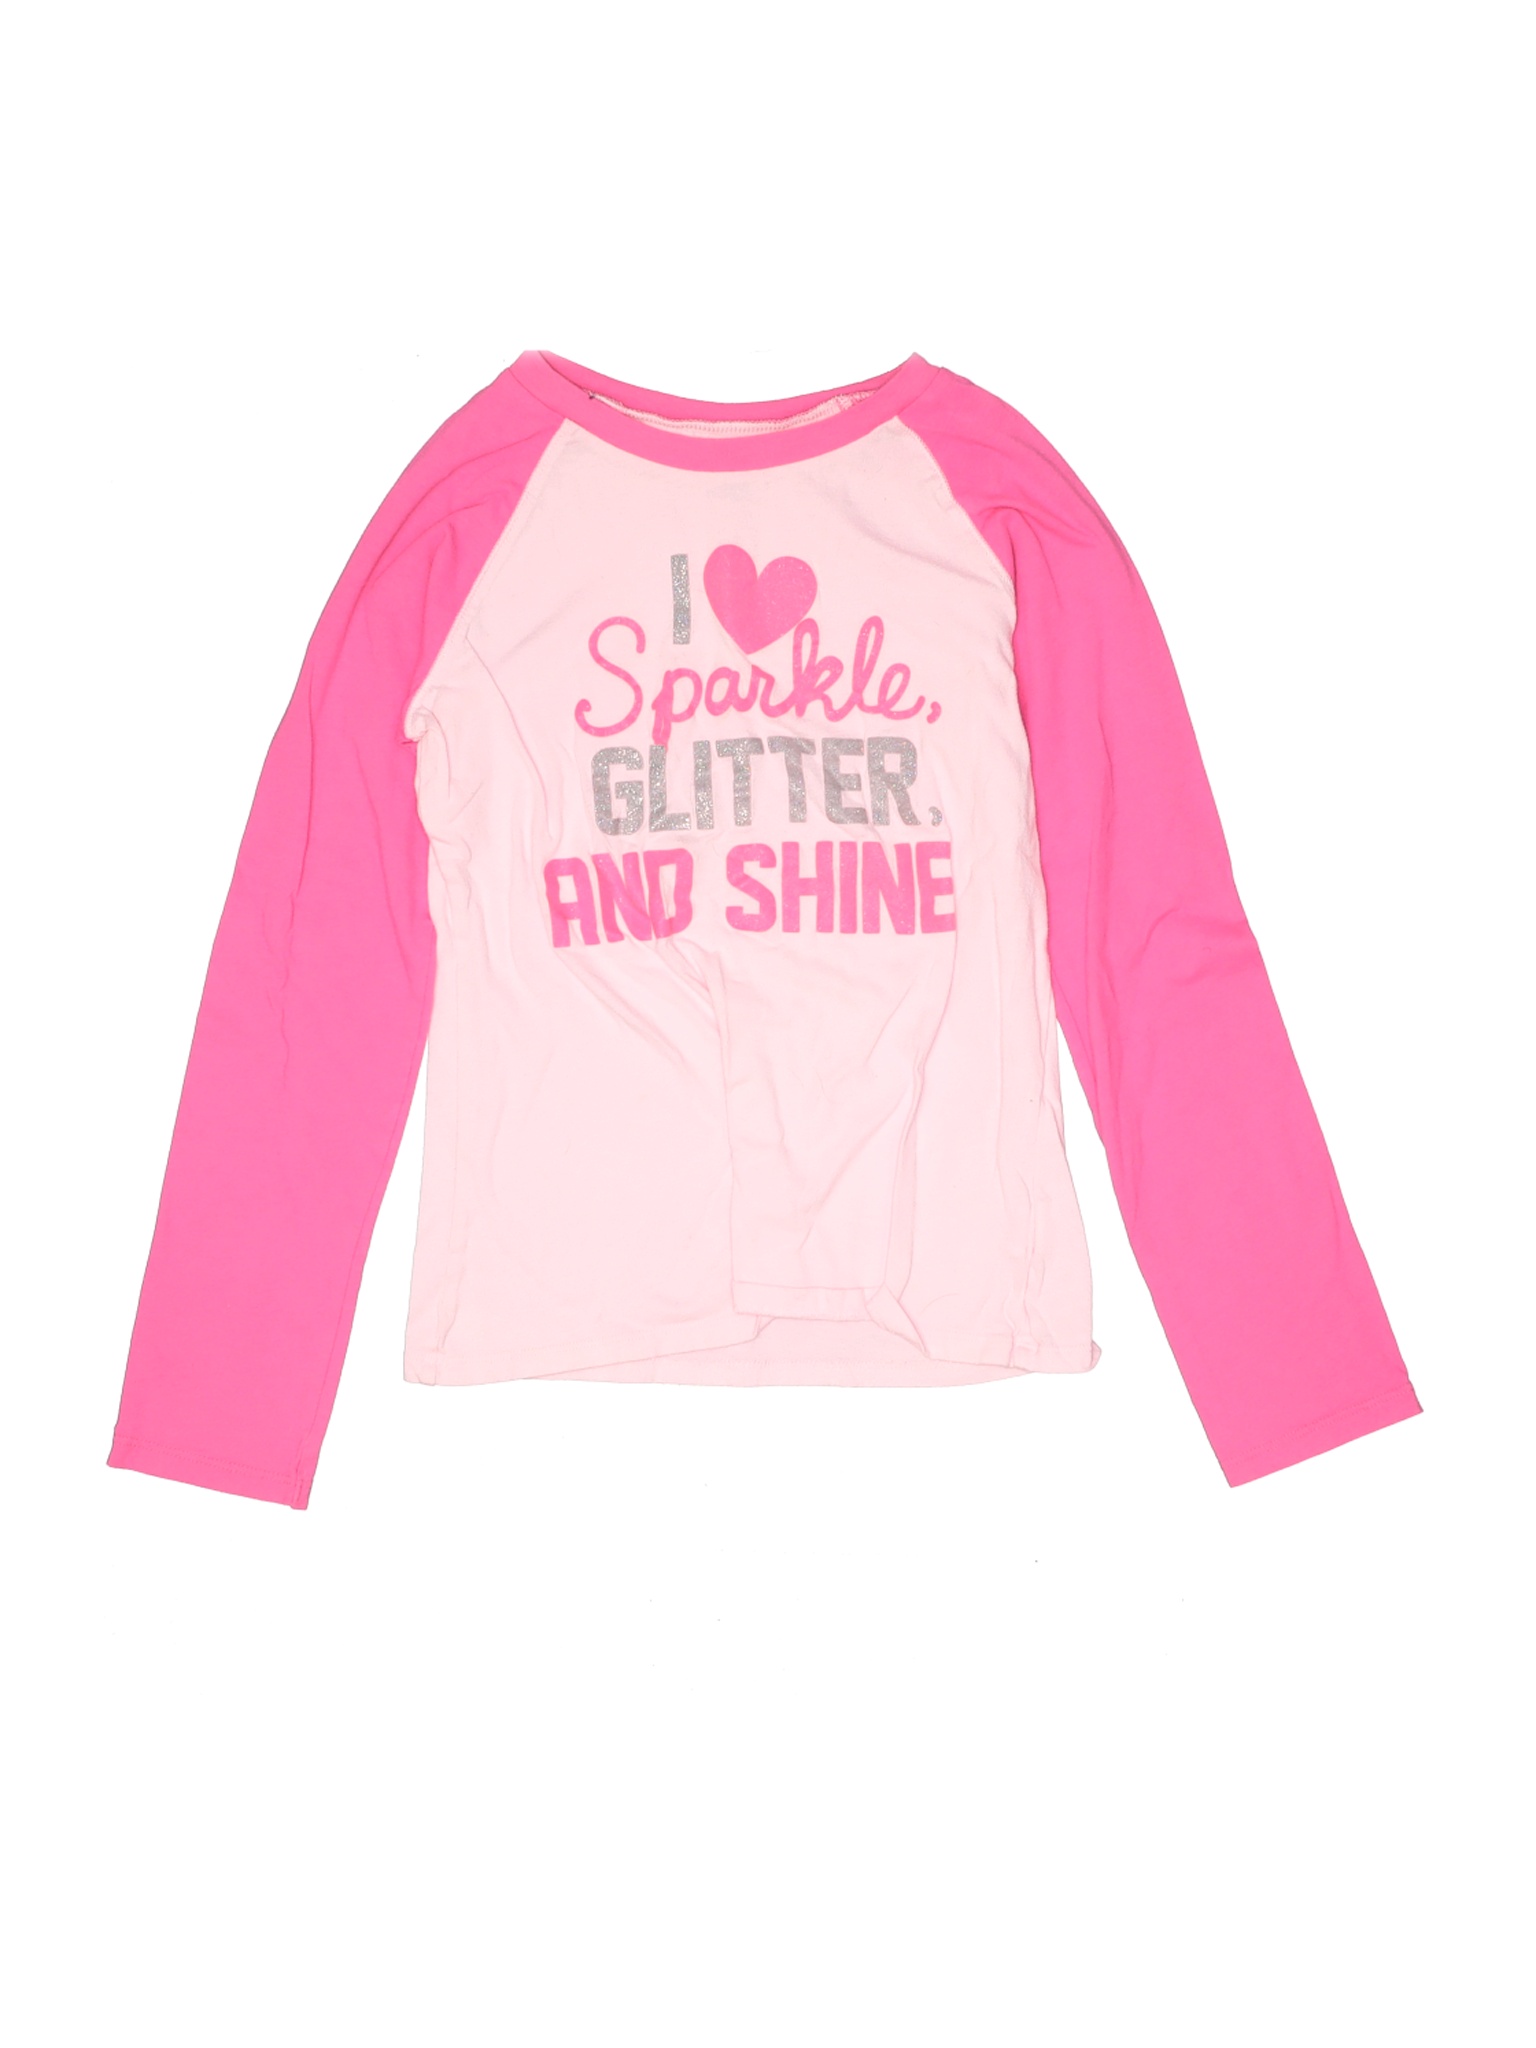 The Children's Place Girls Pink Long Sleeve T-Shirt 14 | eBay